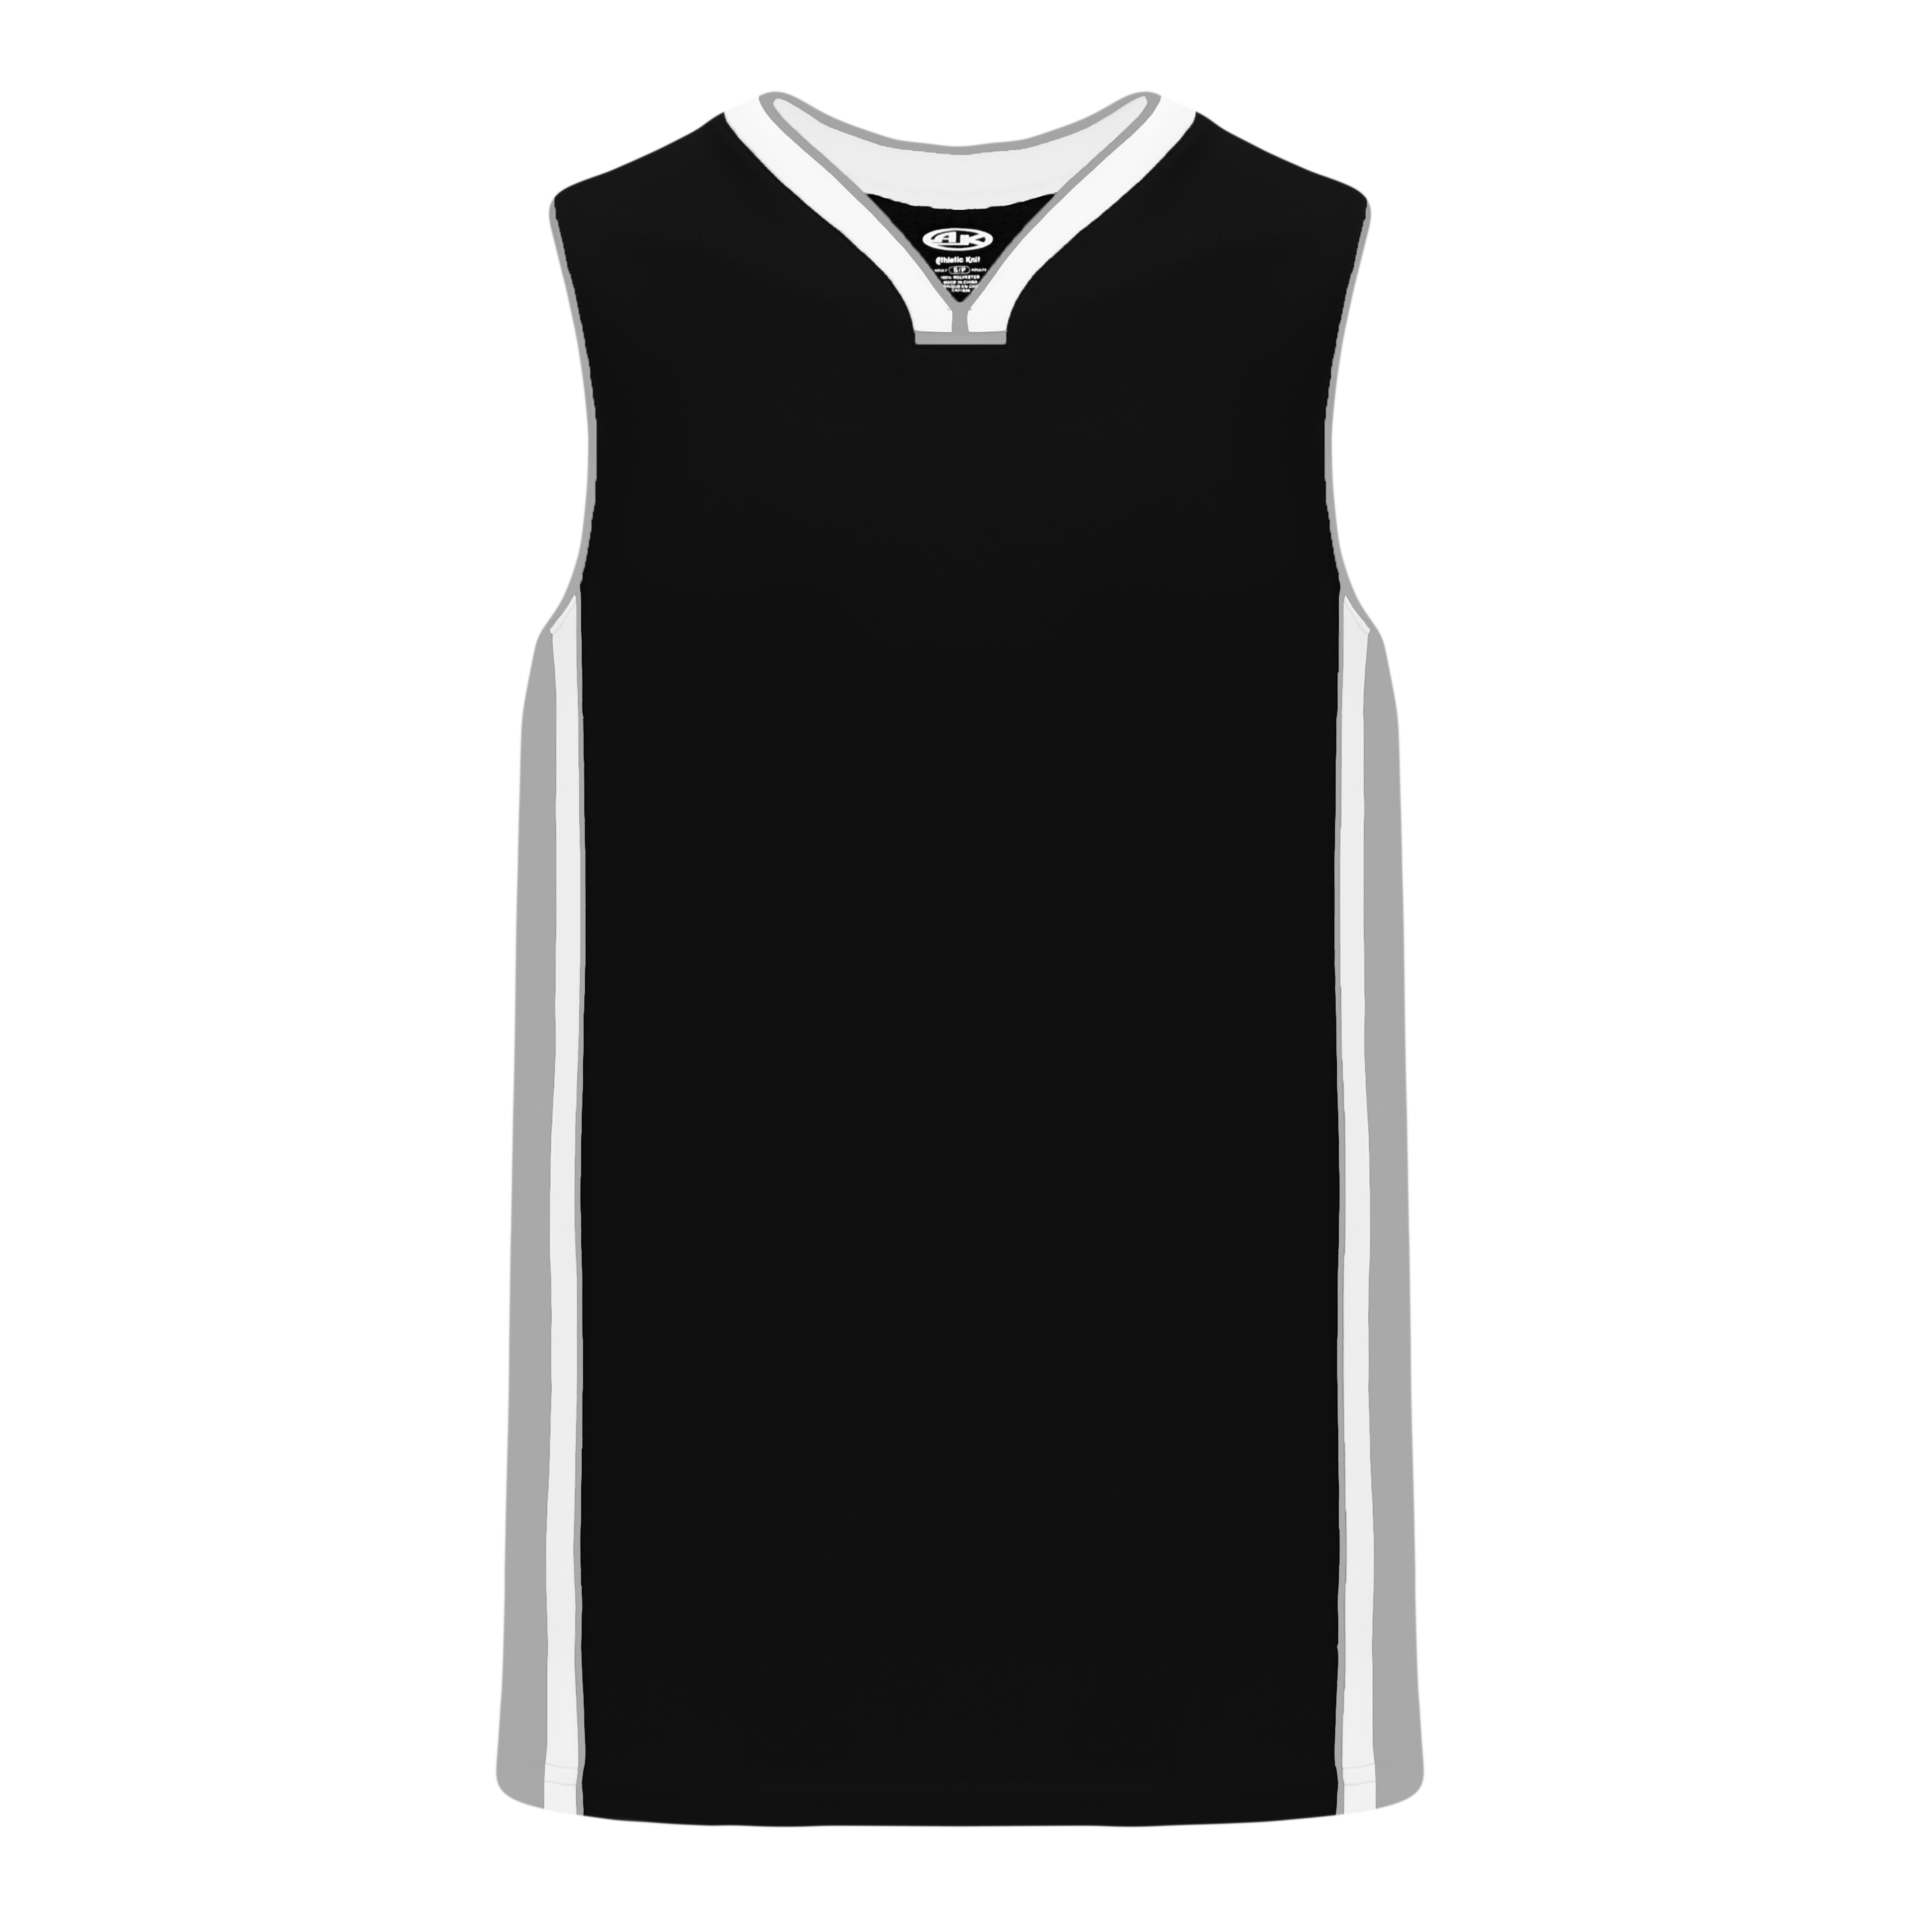 PLAIN BASKETBALL JERSEY GREY-BLACK-WHITE